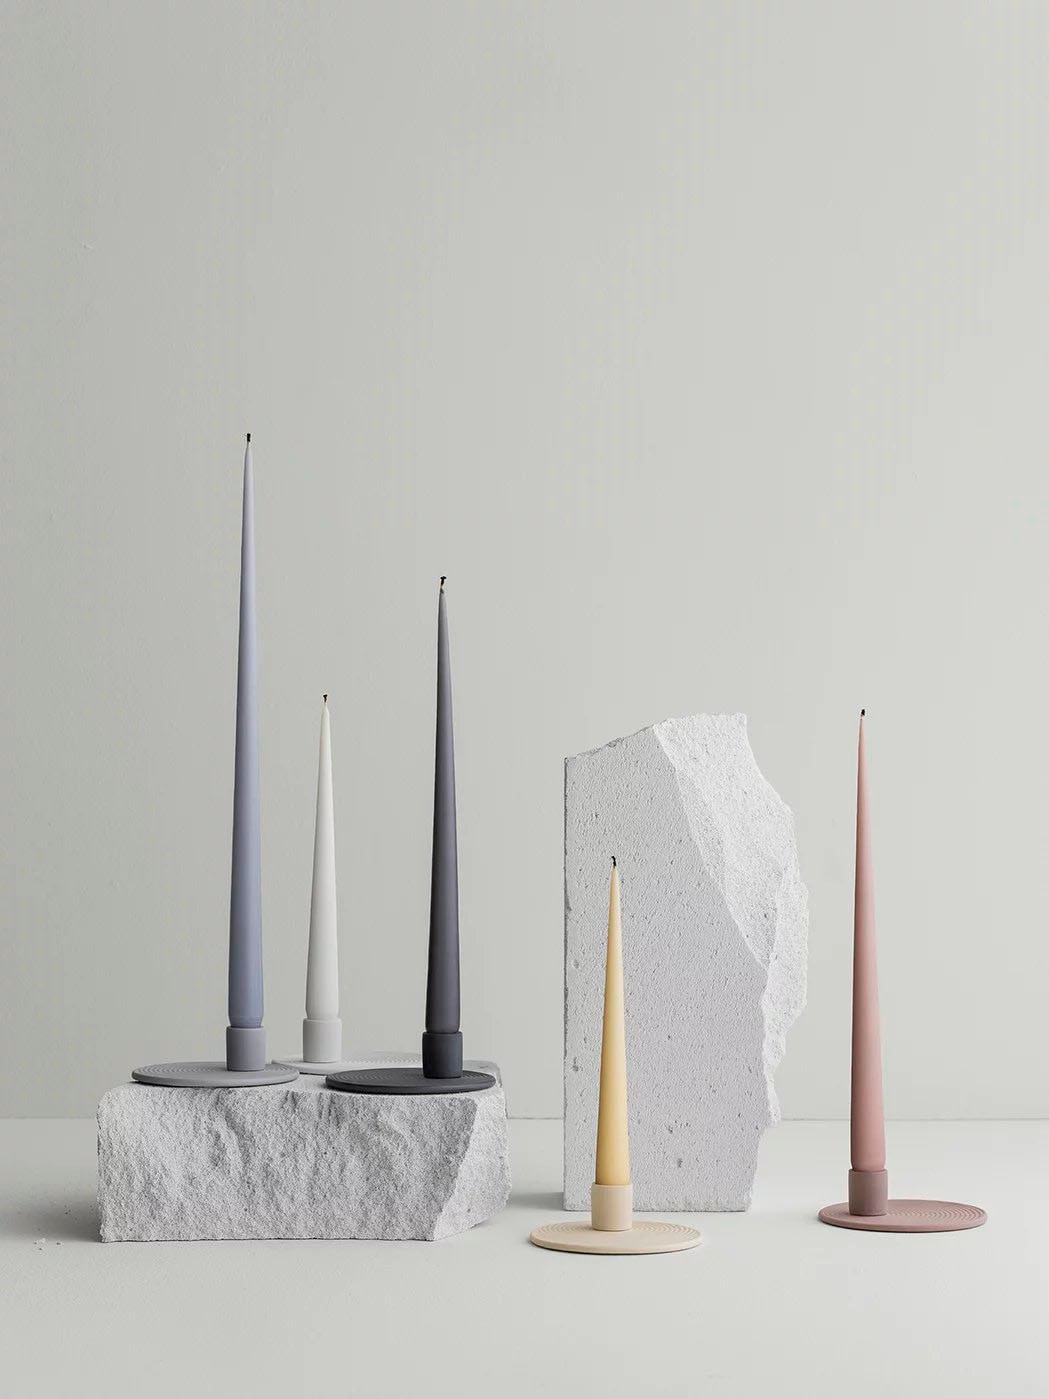 BLOMUS Kerzenhalter »Stabkerzenhalter NONA«, (1 St.), aus Porzellan, handgefertigt, Höhe ca. 3,5 cm